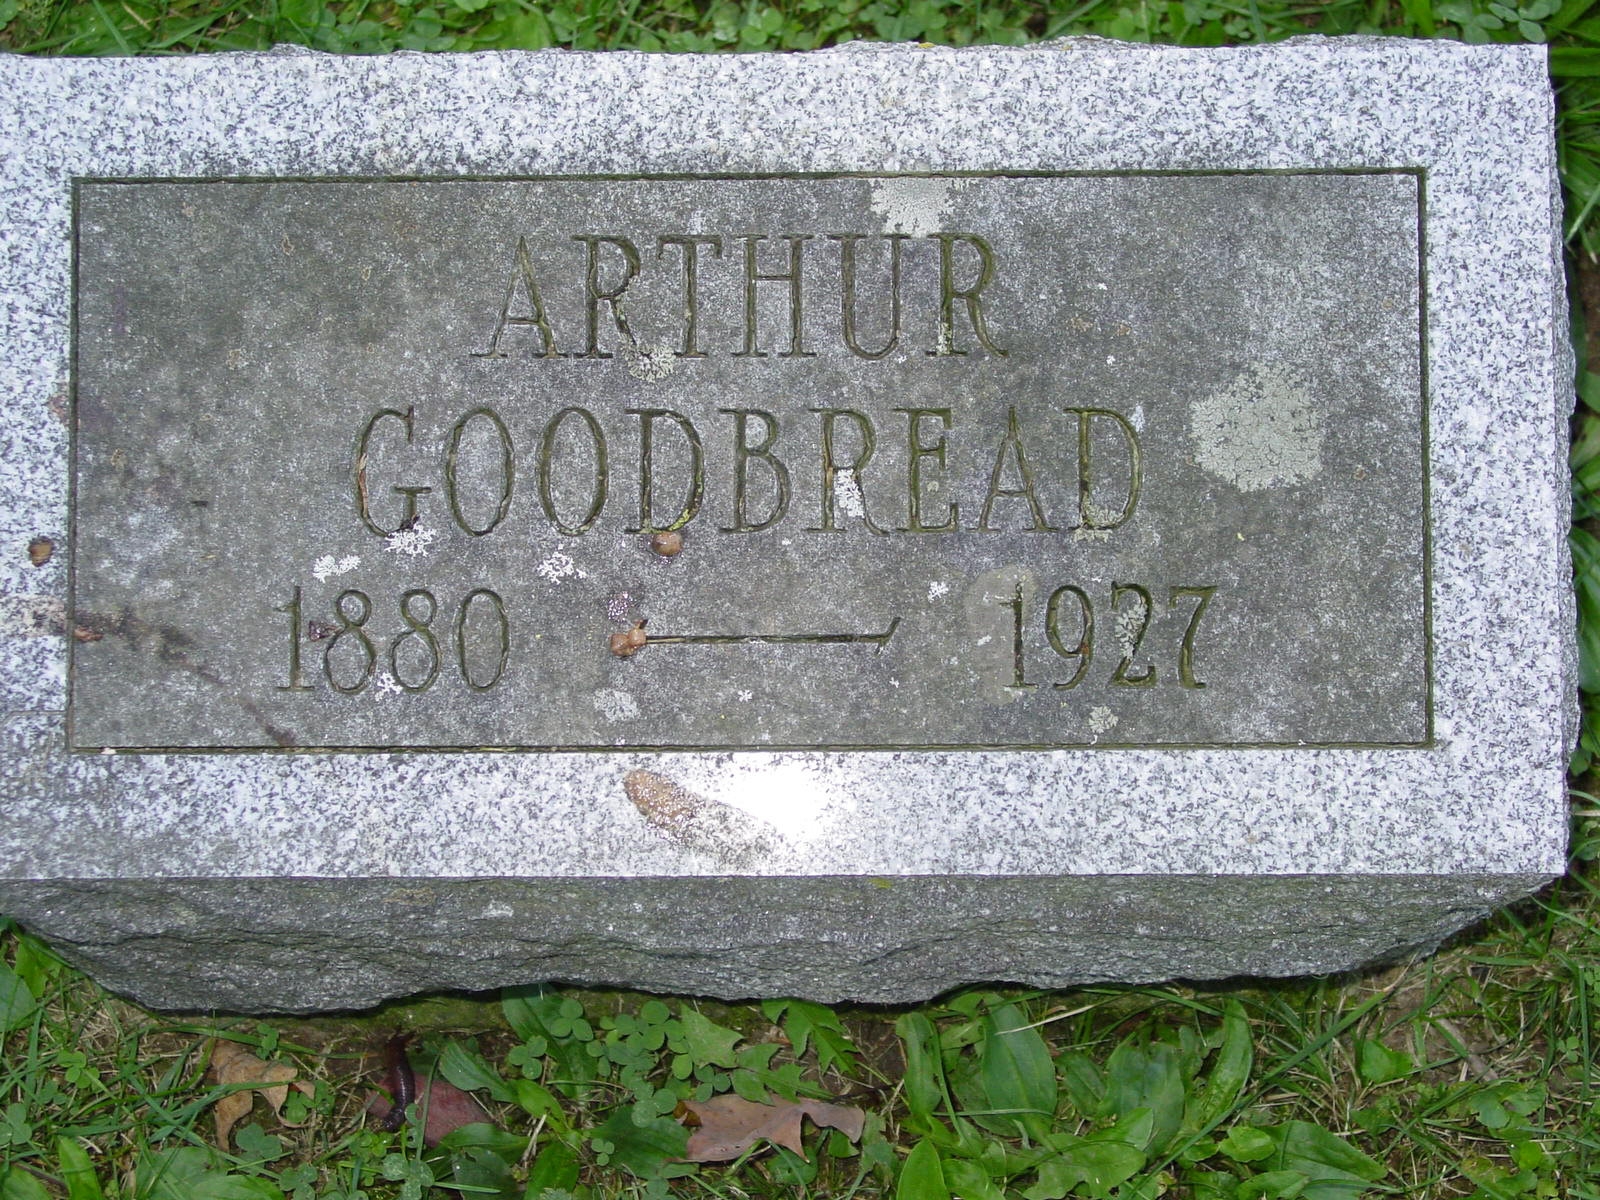 Arthur Goodbread gravesite